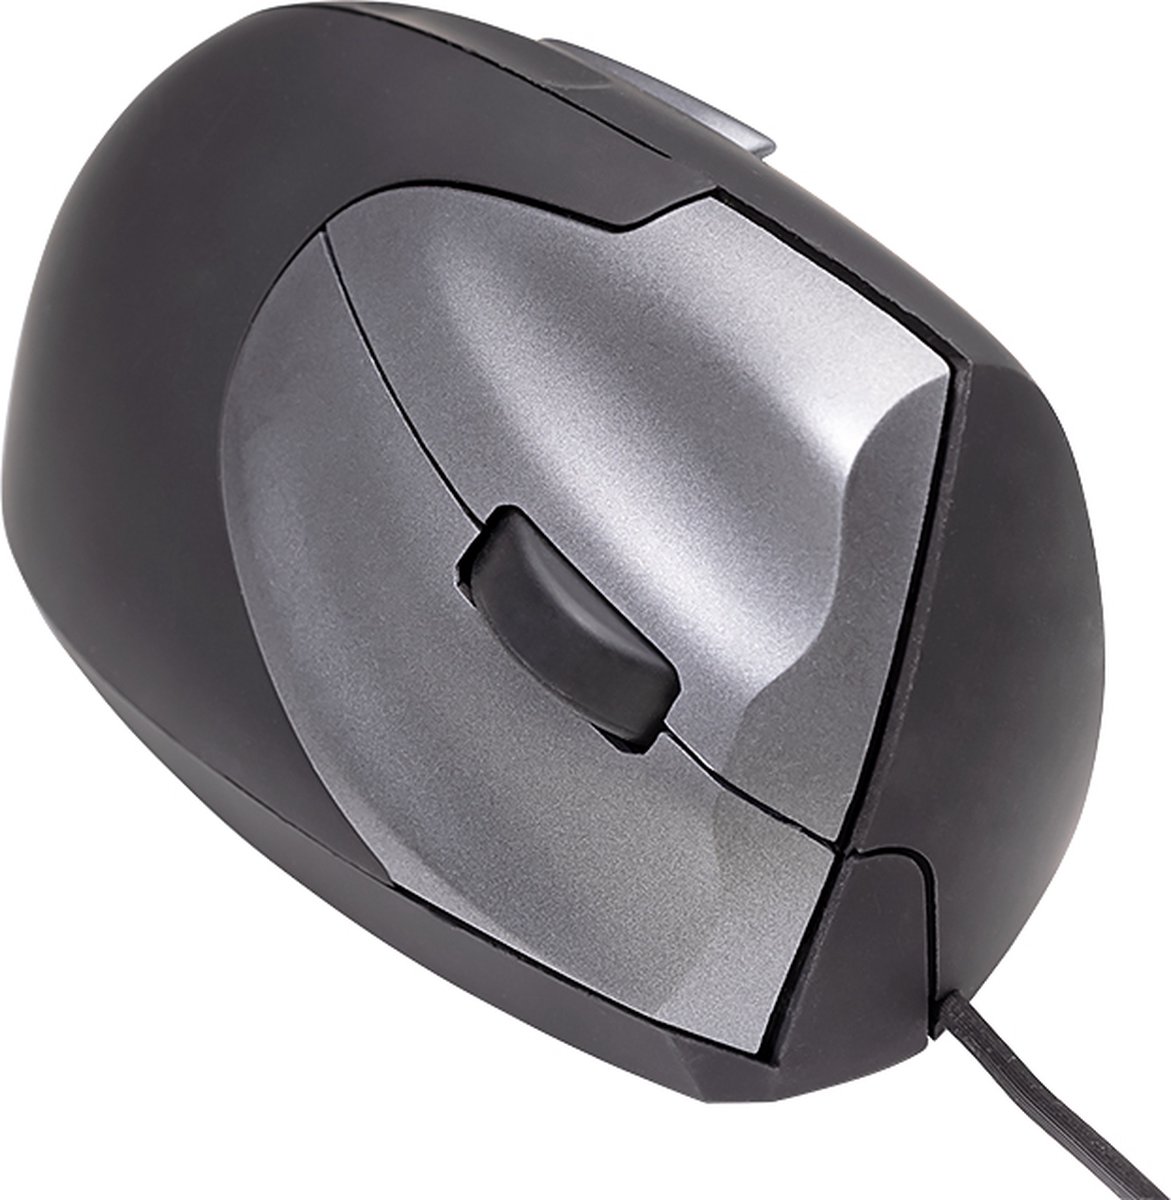 Ergofy SRM Vertical mouse VS4 right - wired - ergonomische muis